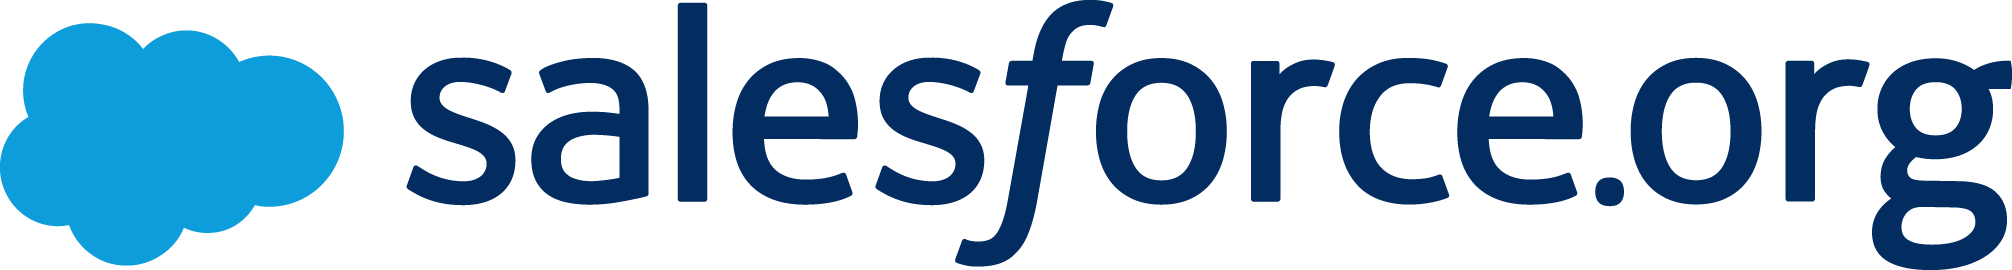 salesforce.org logo